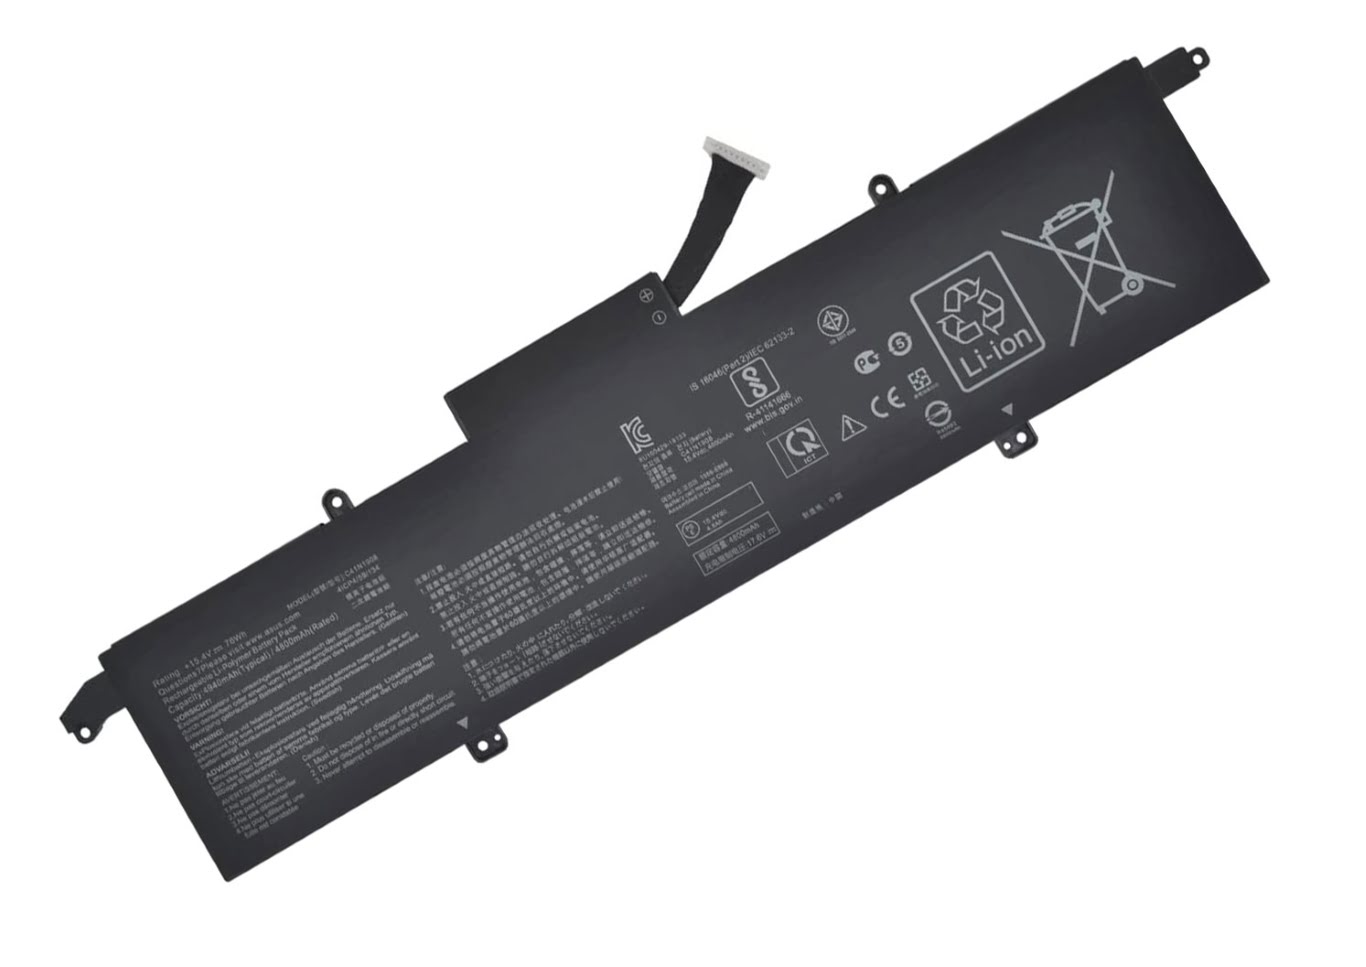 0B200-03610000, C41N1908 replacement Laptop Battery for Asus GA401II, GA401IU, 15.4v, 4 cells, 76wh